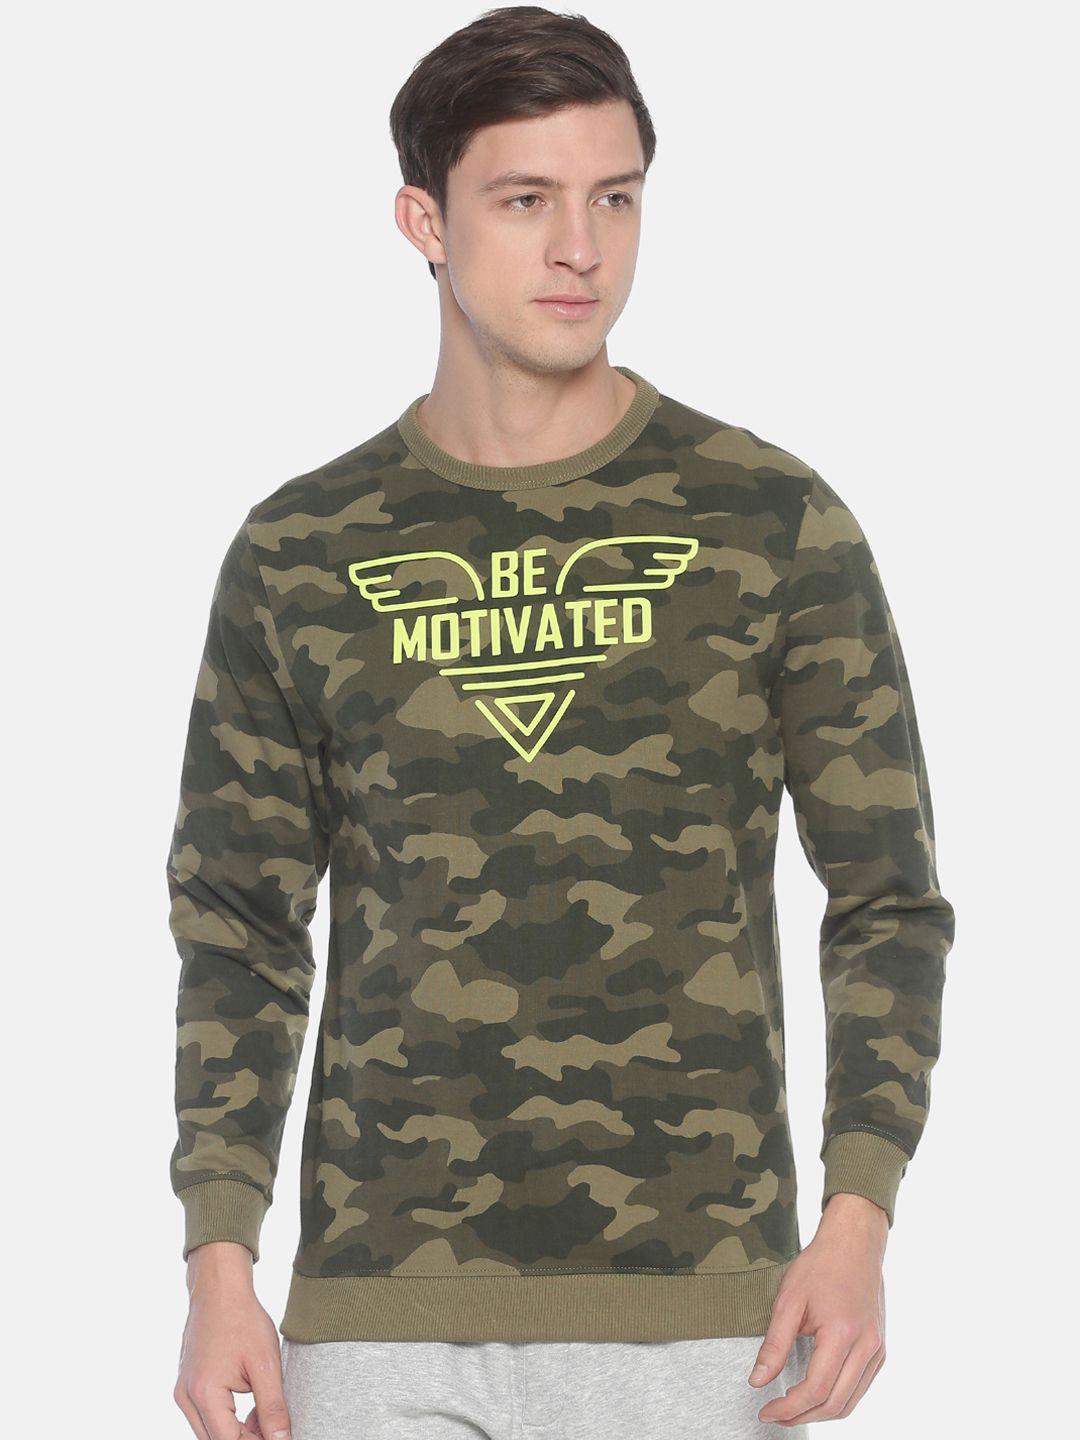 steenbok men green camouflage printed sweatshirt